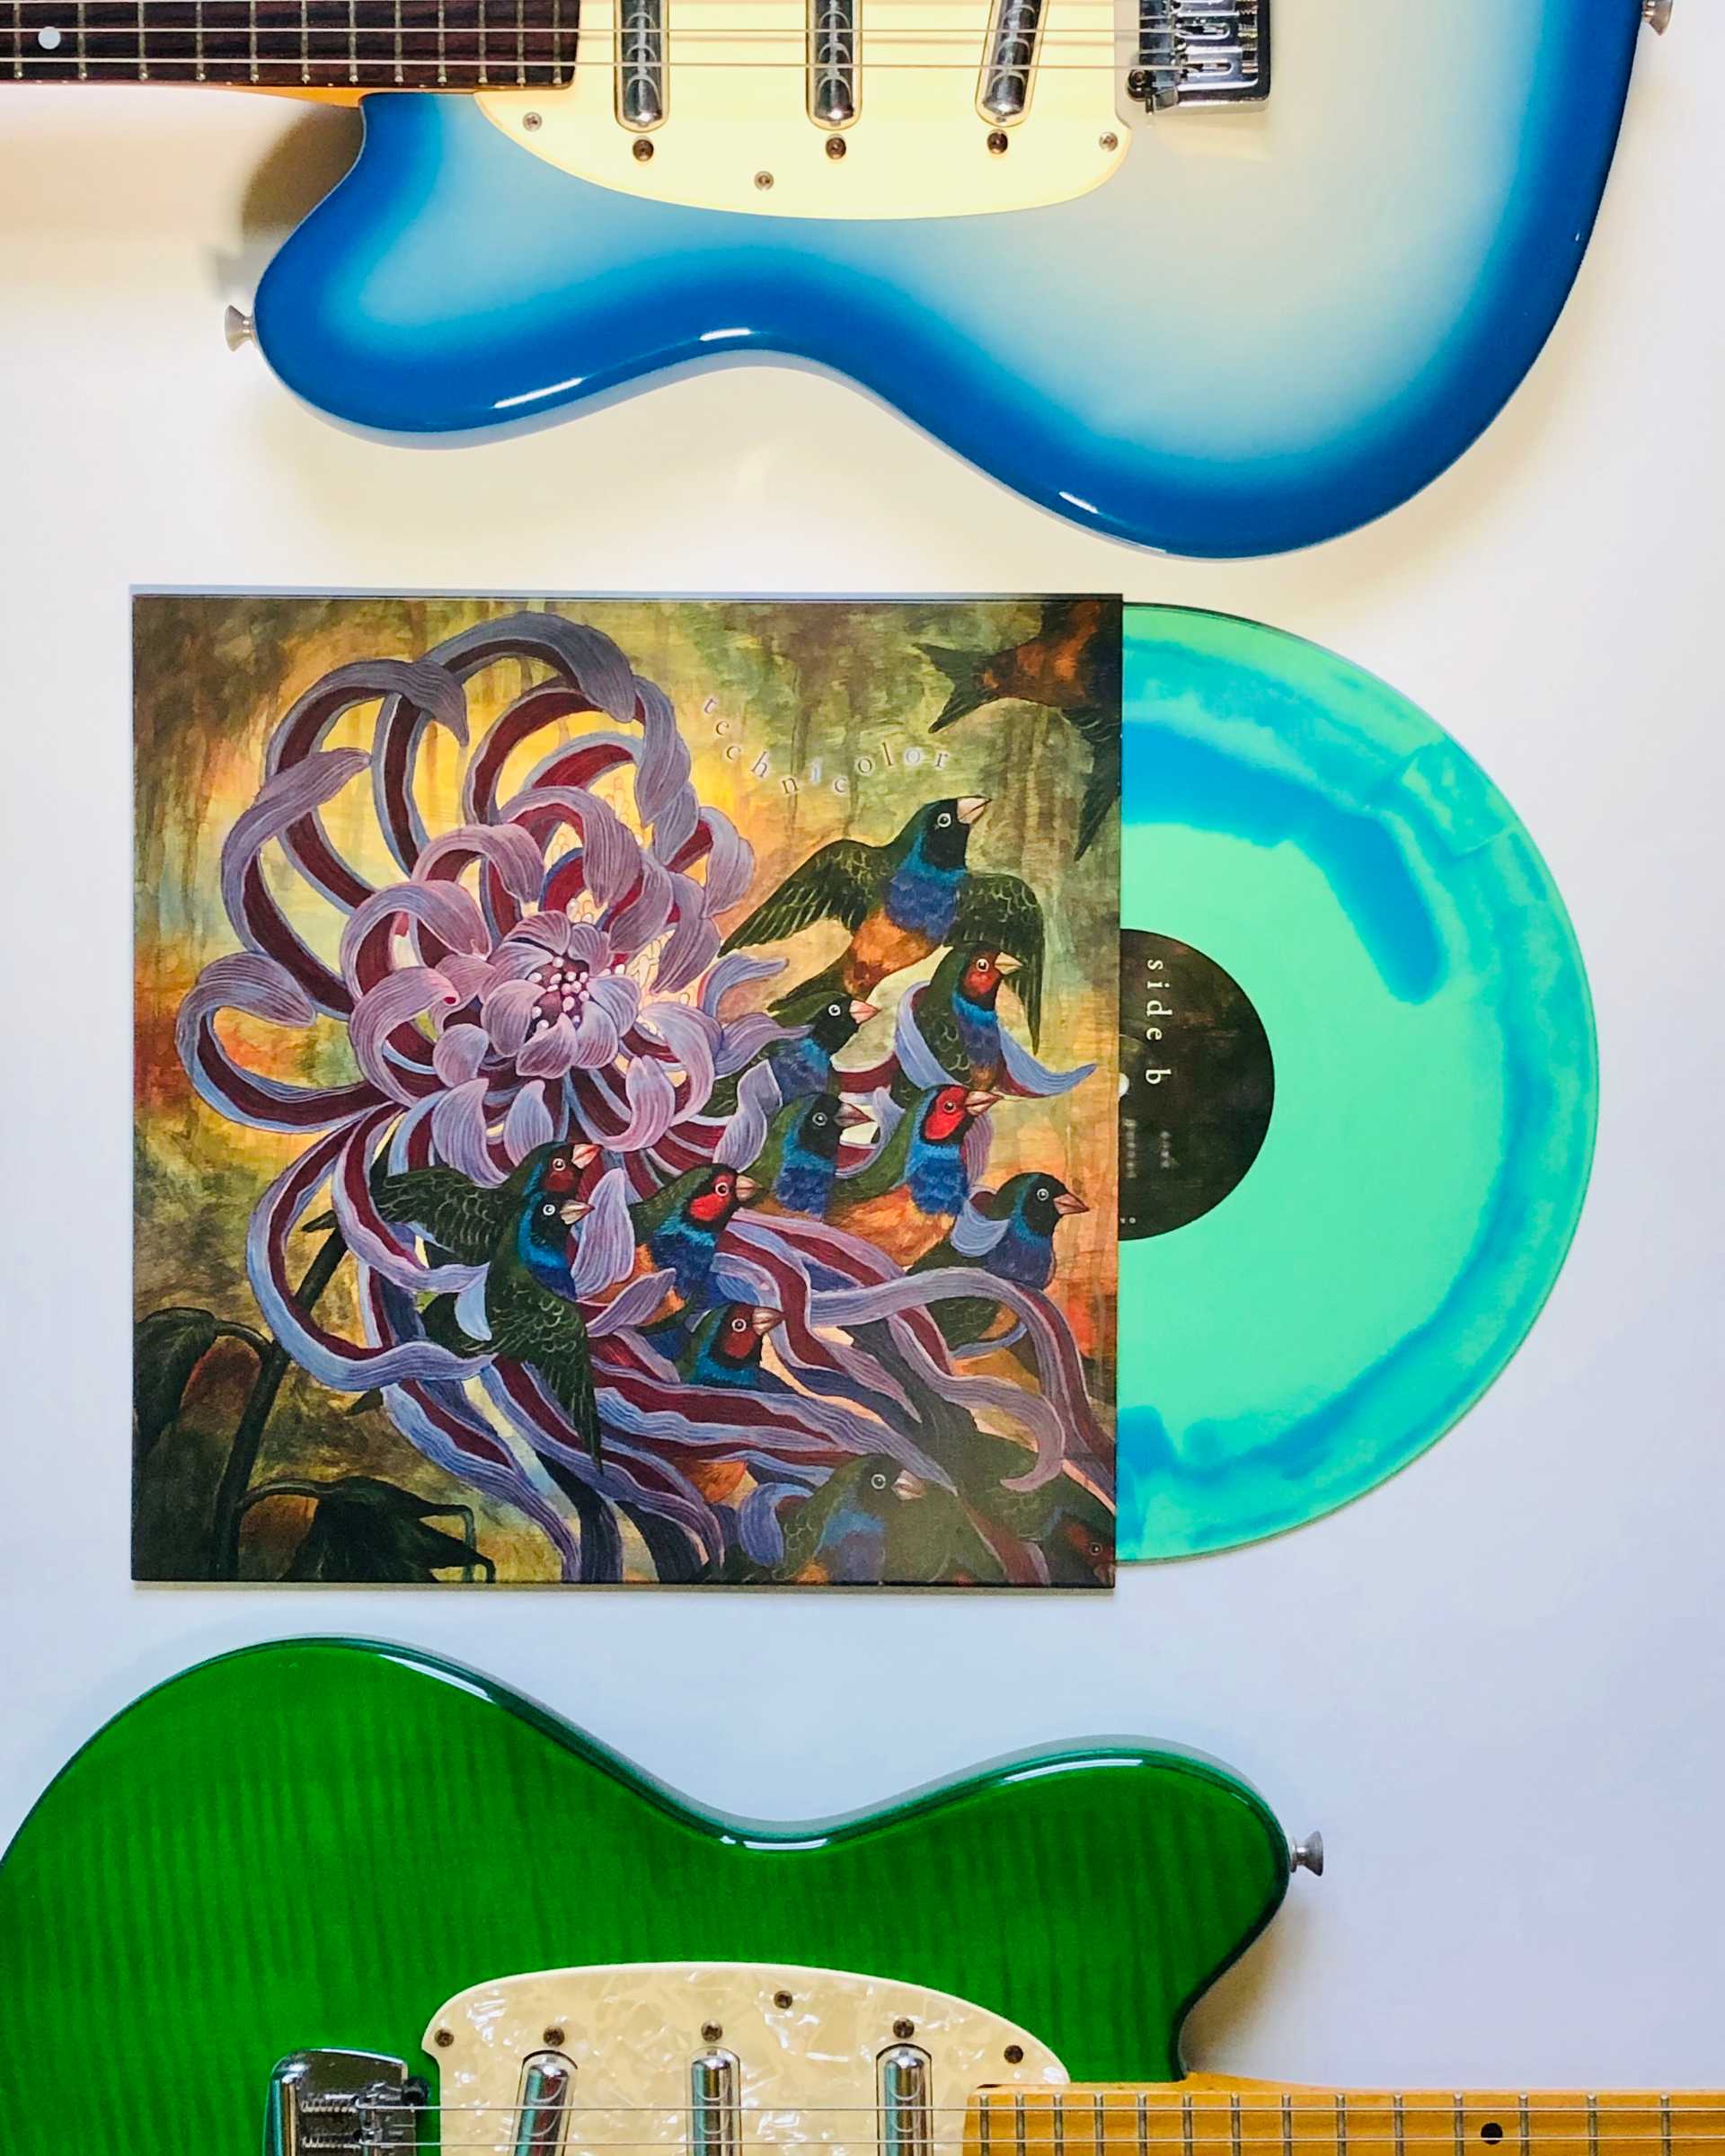 Covet's technicolor album on vinyl, surrounded by two Talman guitars